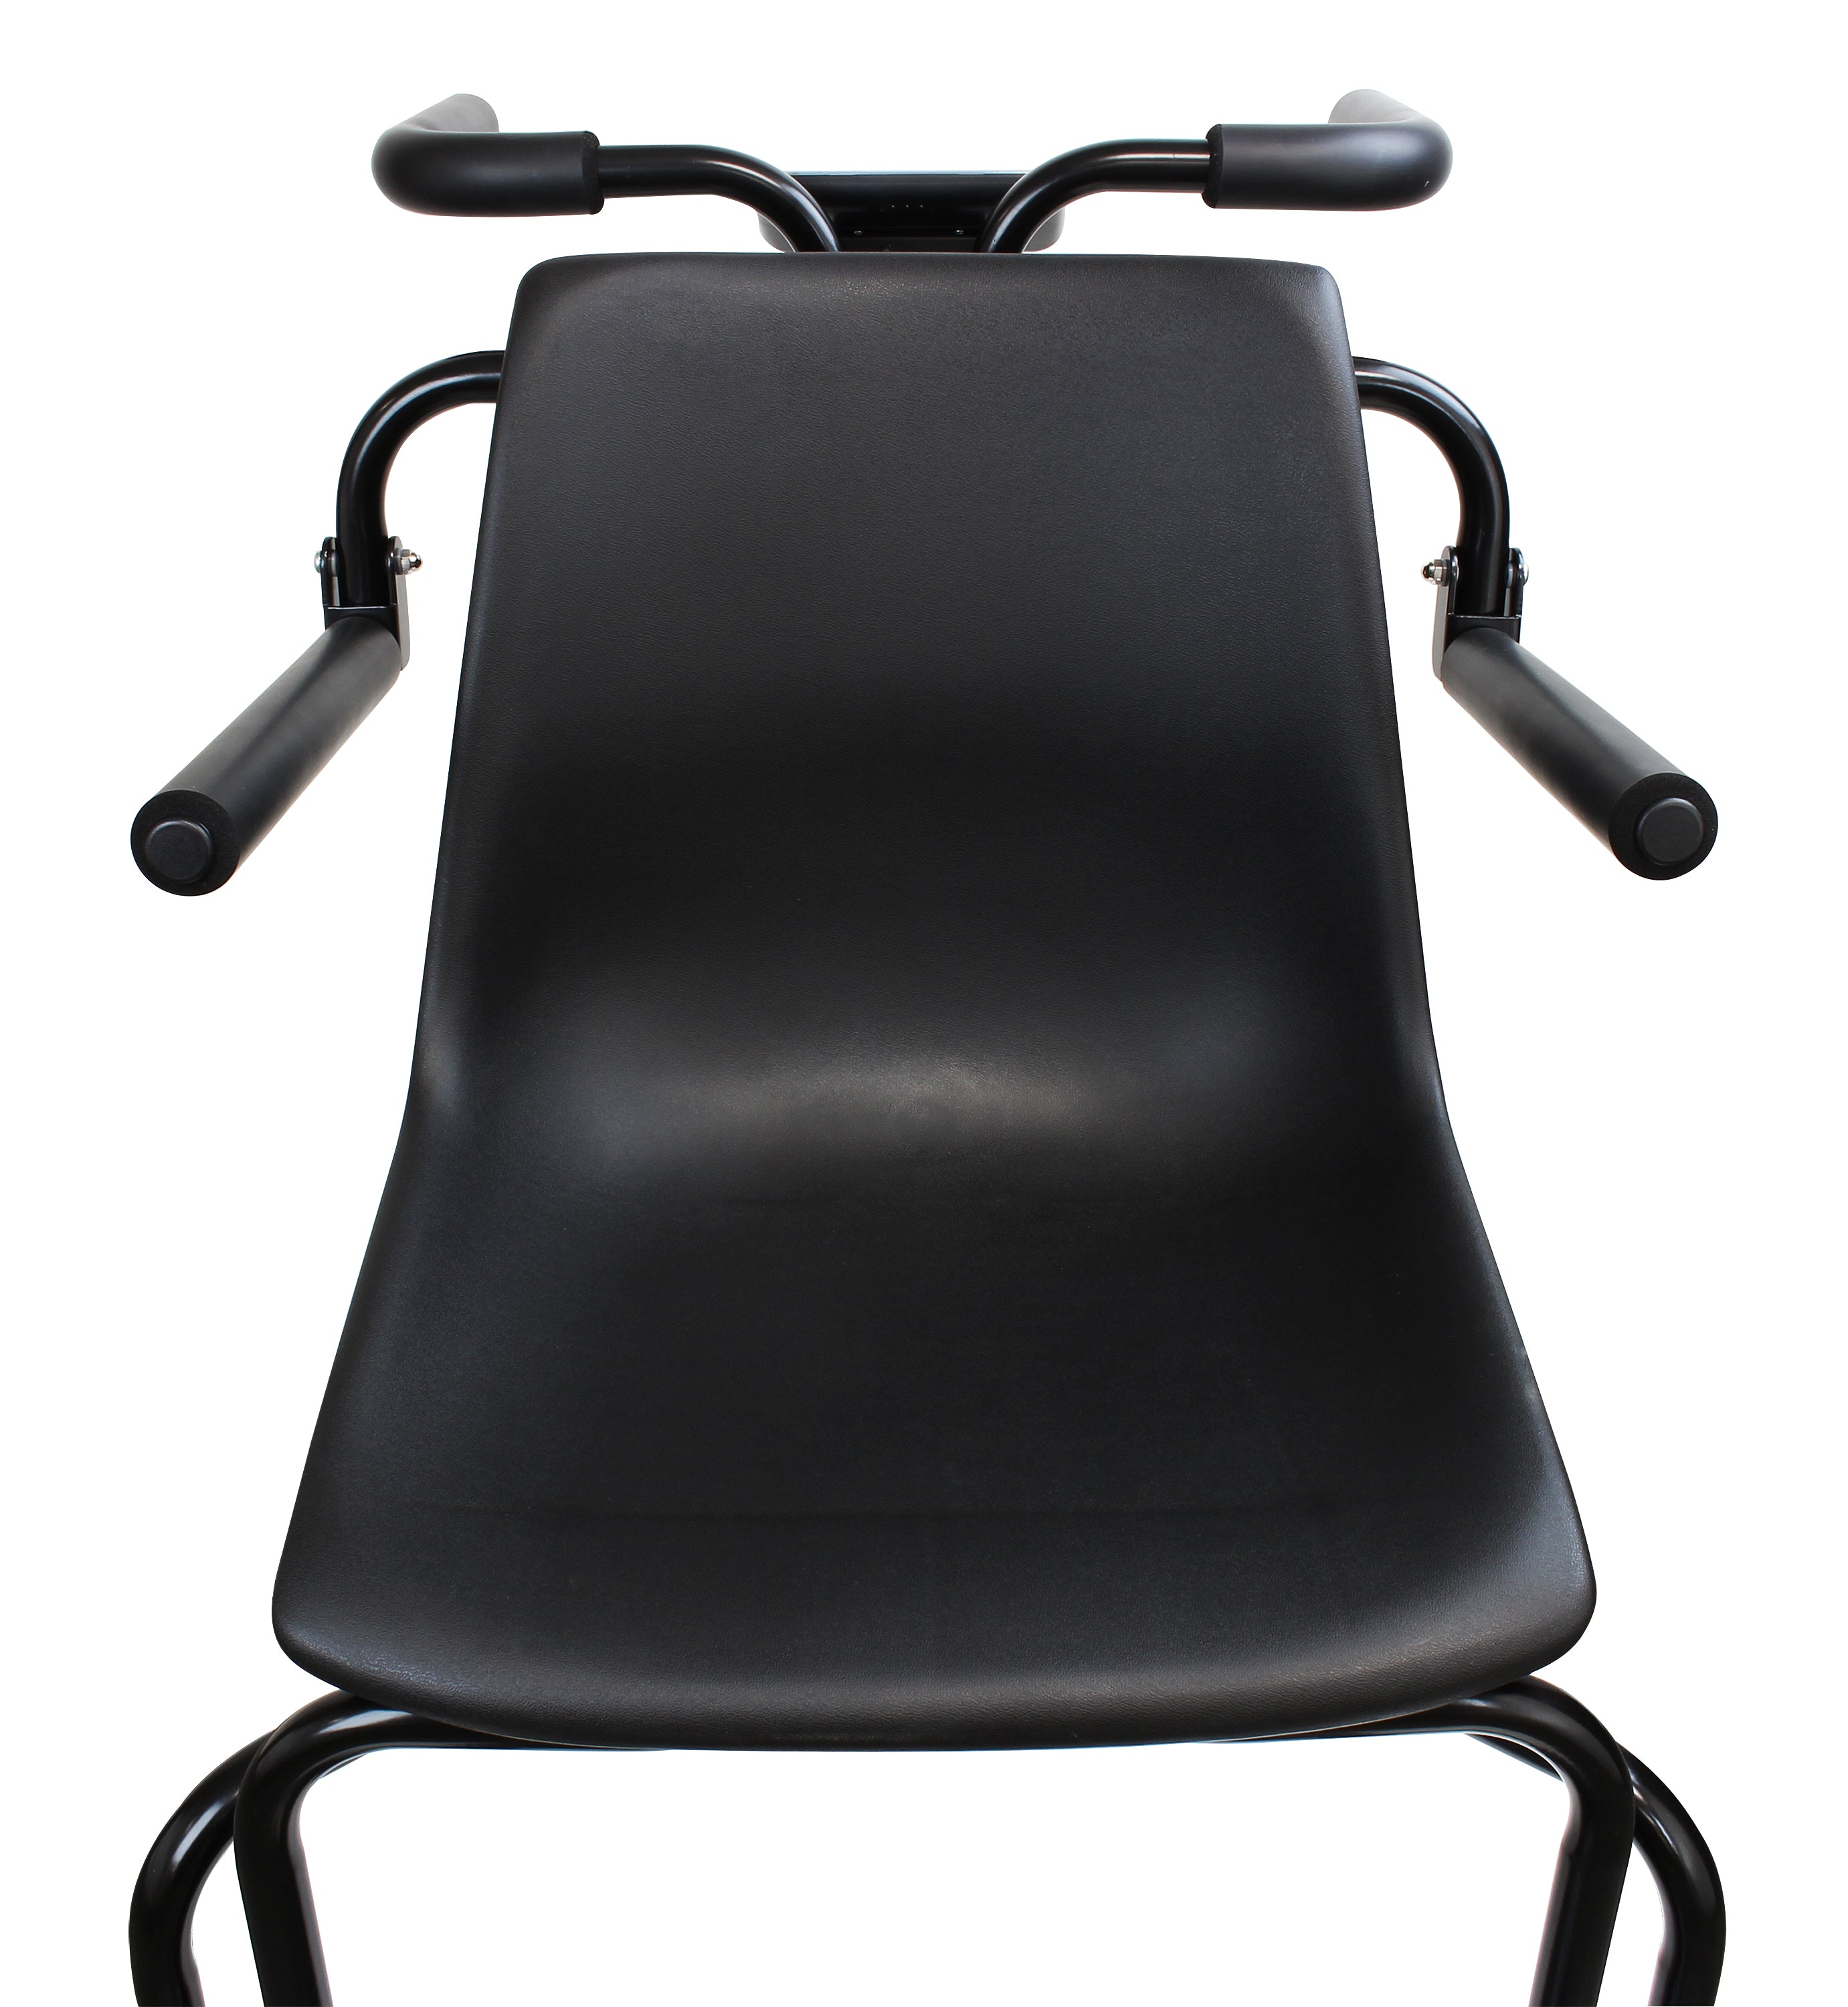 Detecto 6880-C Chair Scale, Digital, 550 lb x .2 lb / 250 kg x .1 kg, BT / Wi-Fi